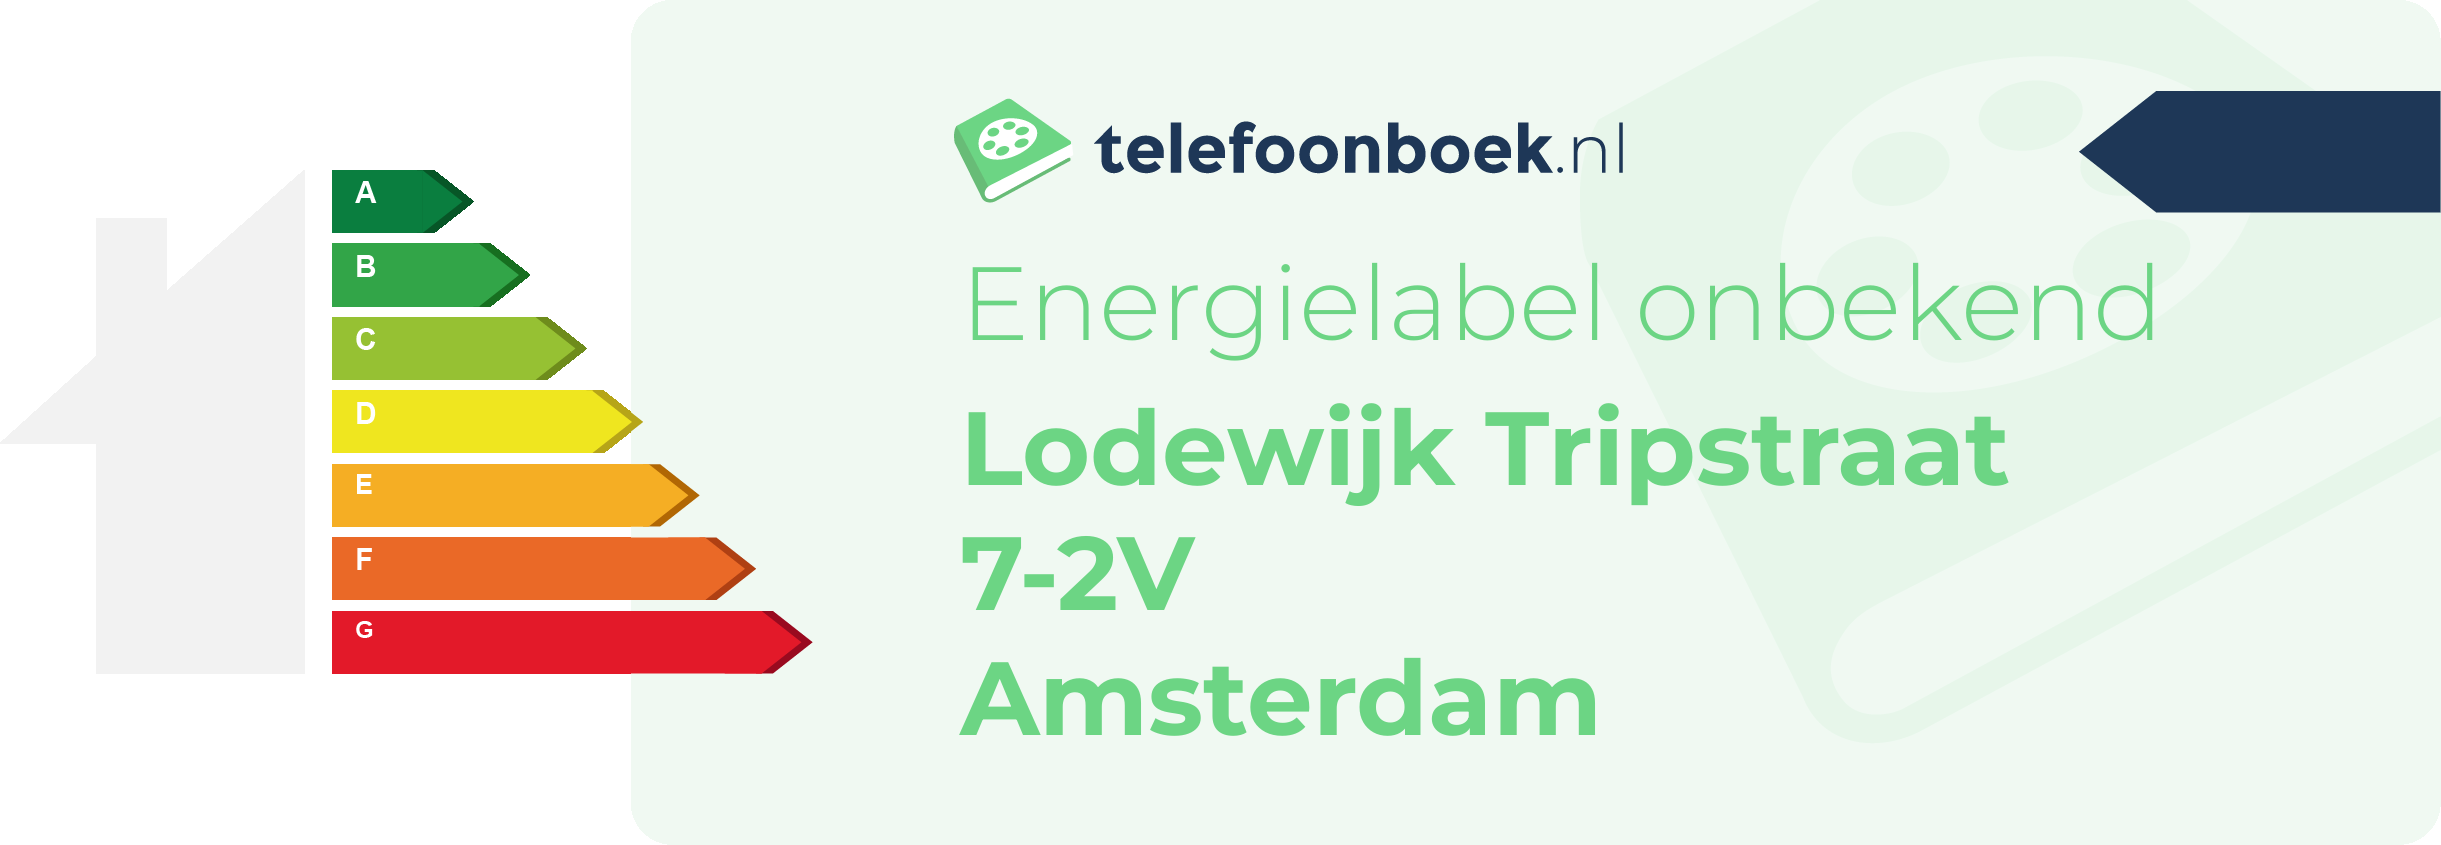 Energielabel Lodewijk Tripstraat 7-2V Amsterdam